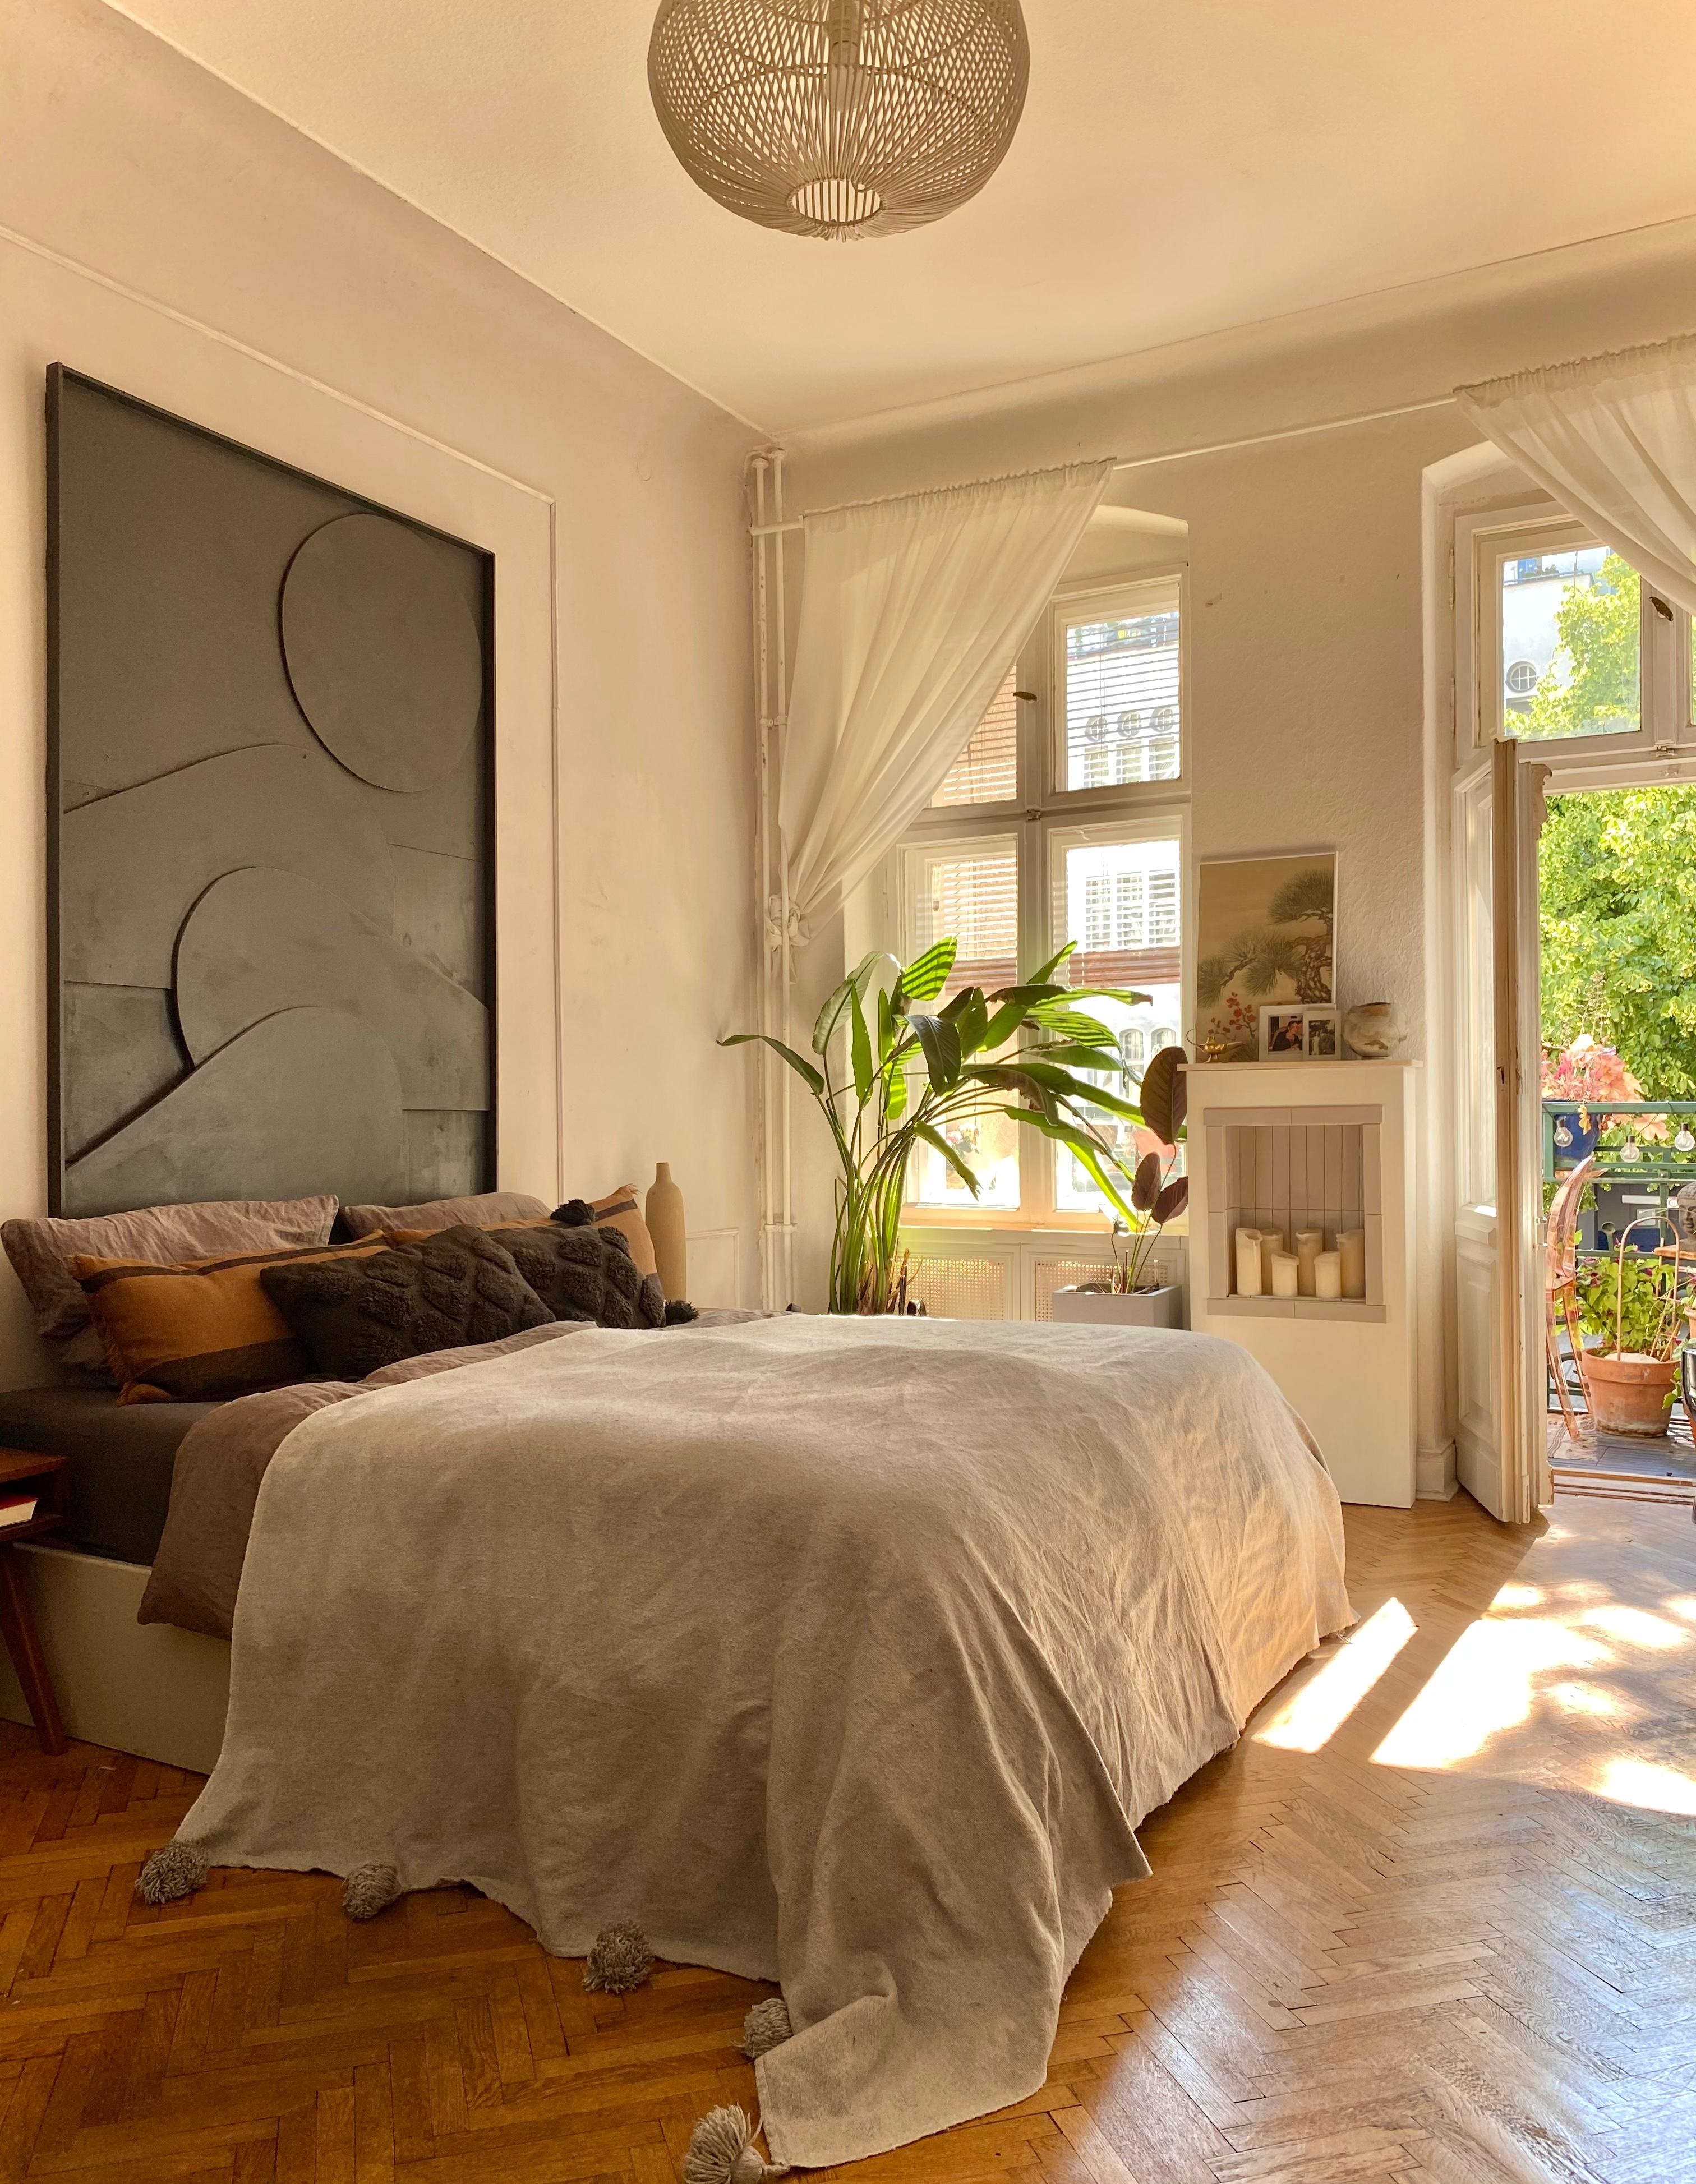 🍹☀️♥️ #schlafzimmer #bedroom #holzboden #altbau #kunst #bild #kamin #balkon #bett